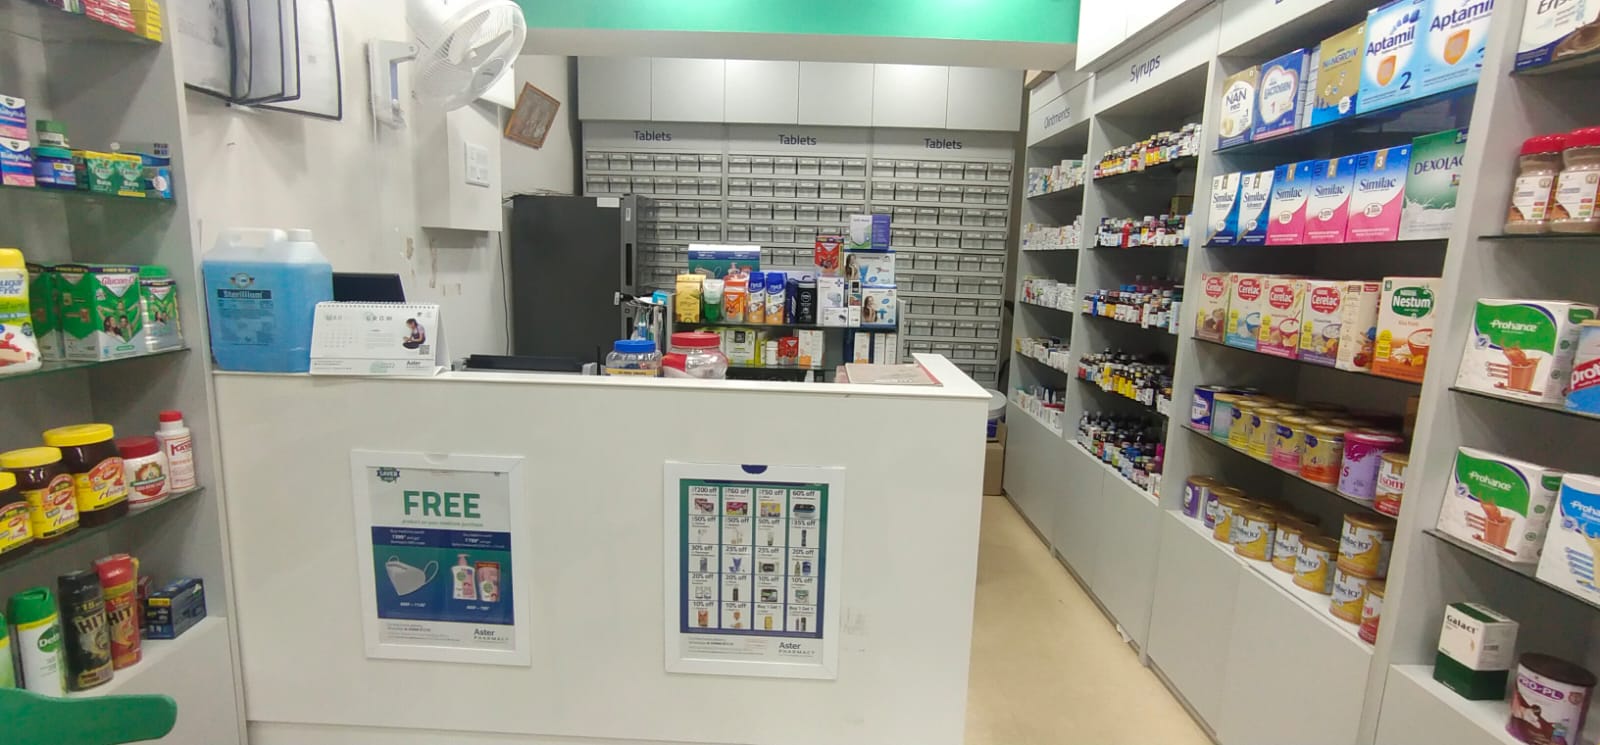 Aster Pharmacy in Marathahalli, Bangalore